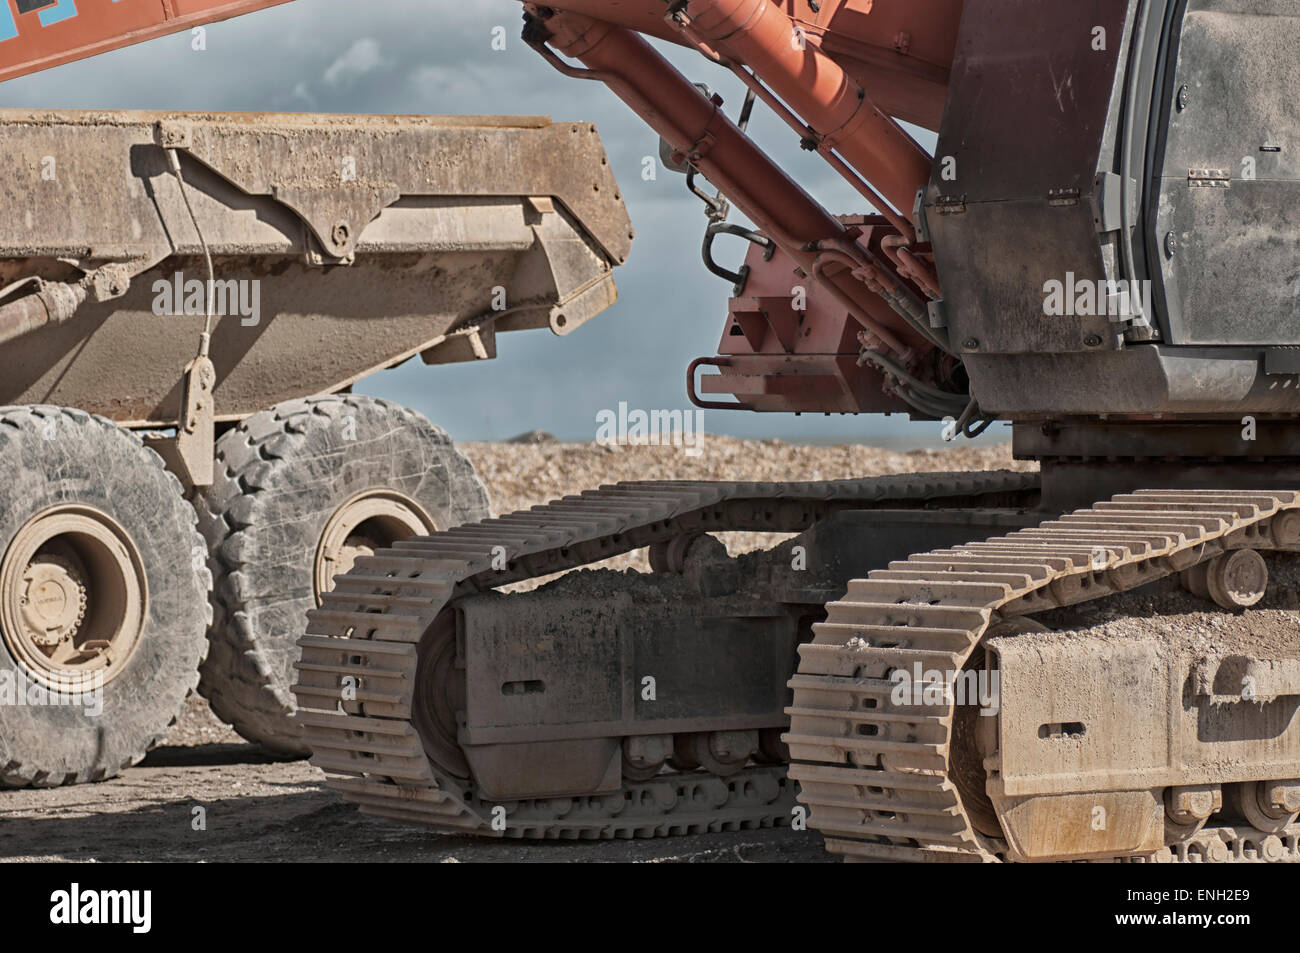 Construction equipment on pebble beach Stock Photo